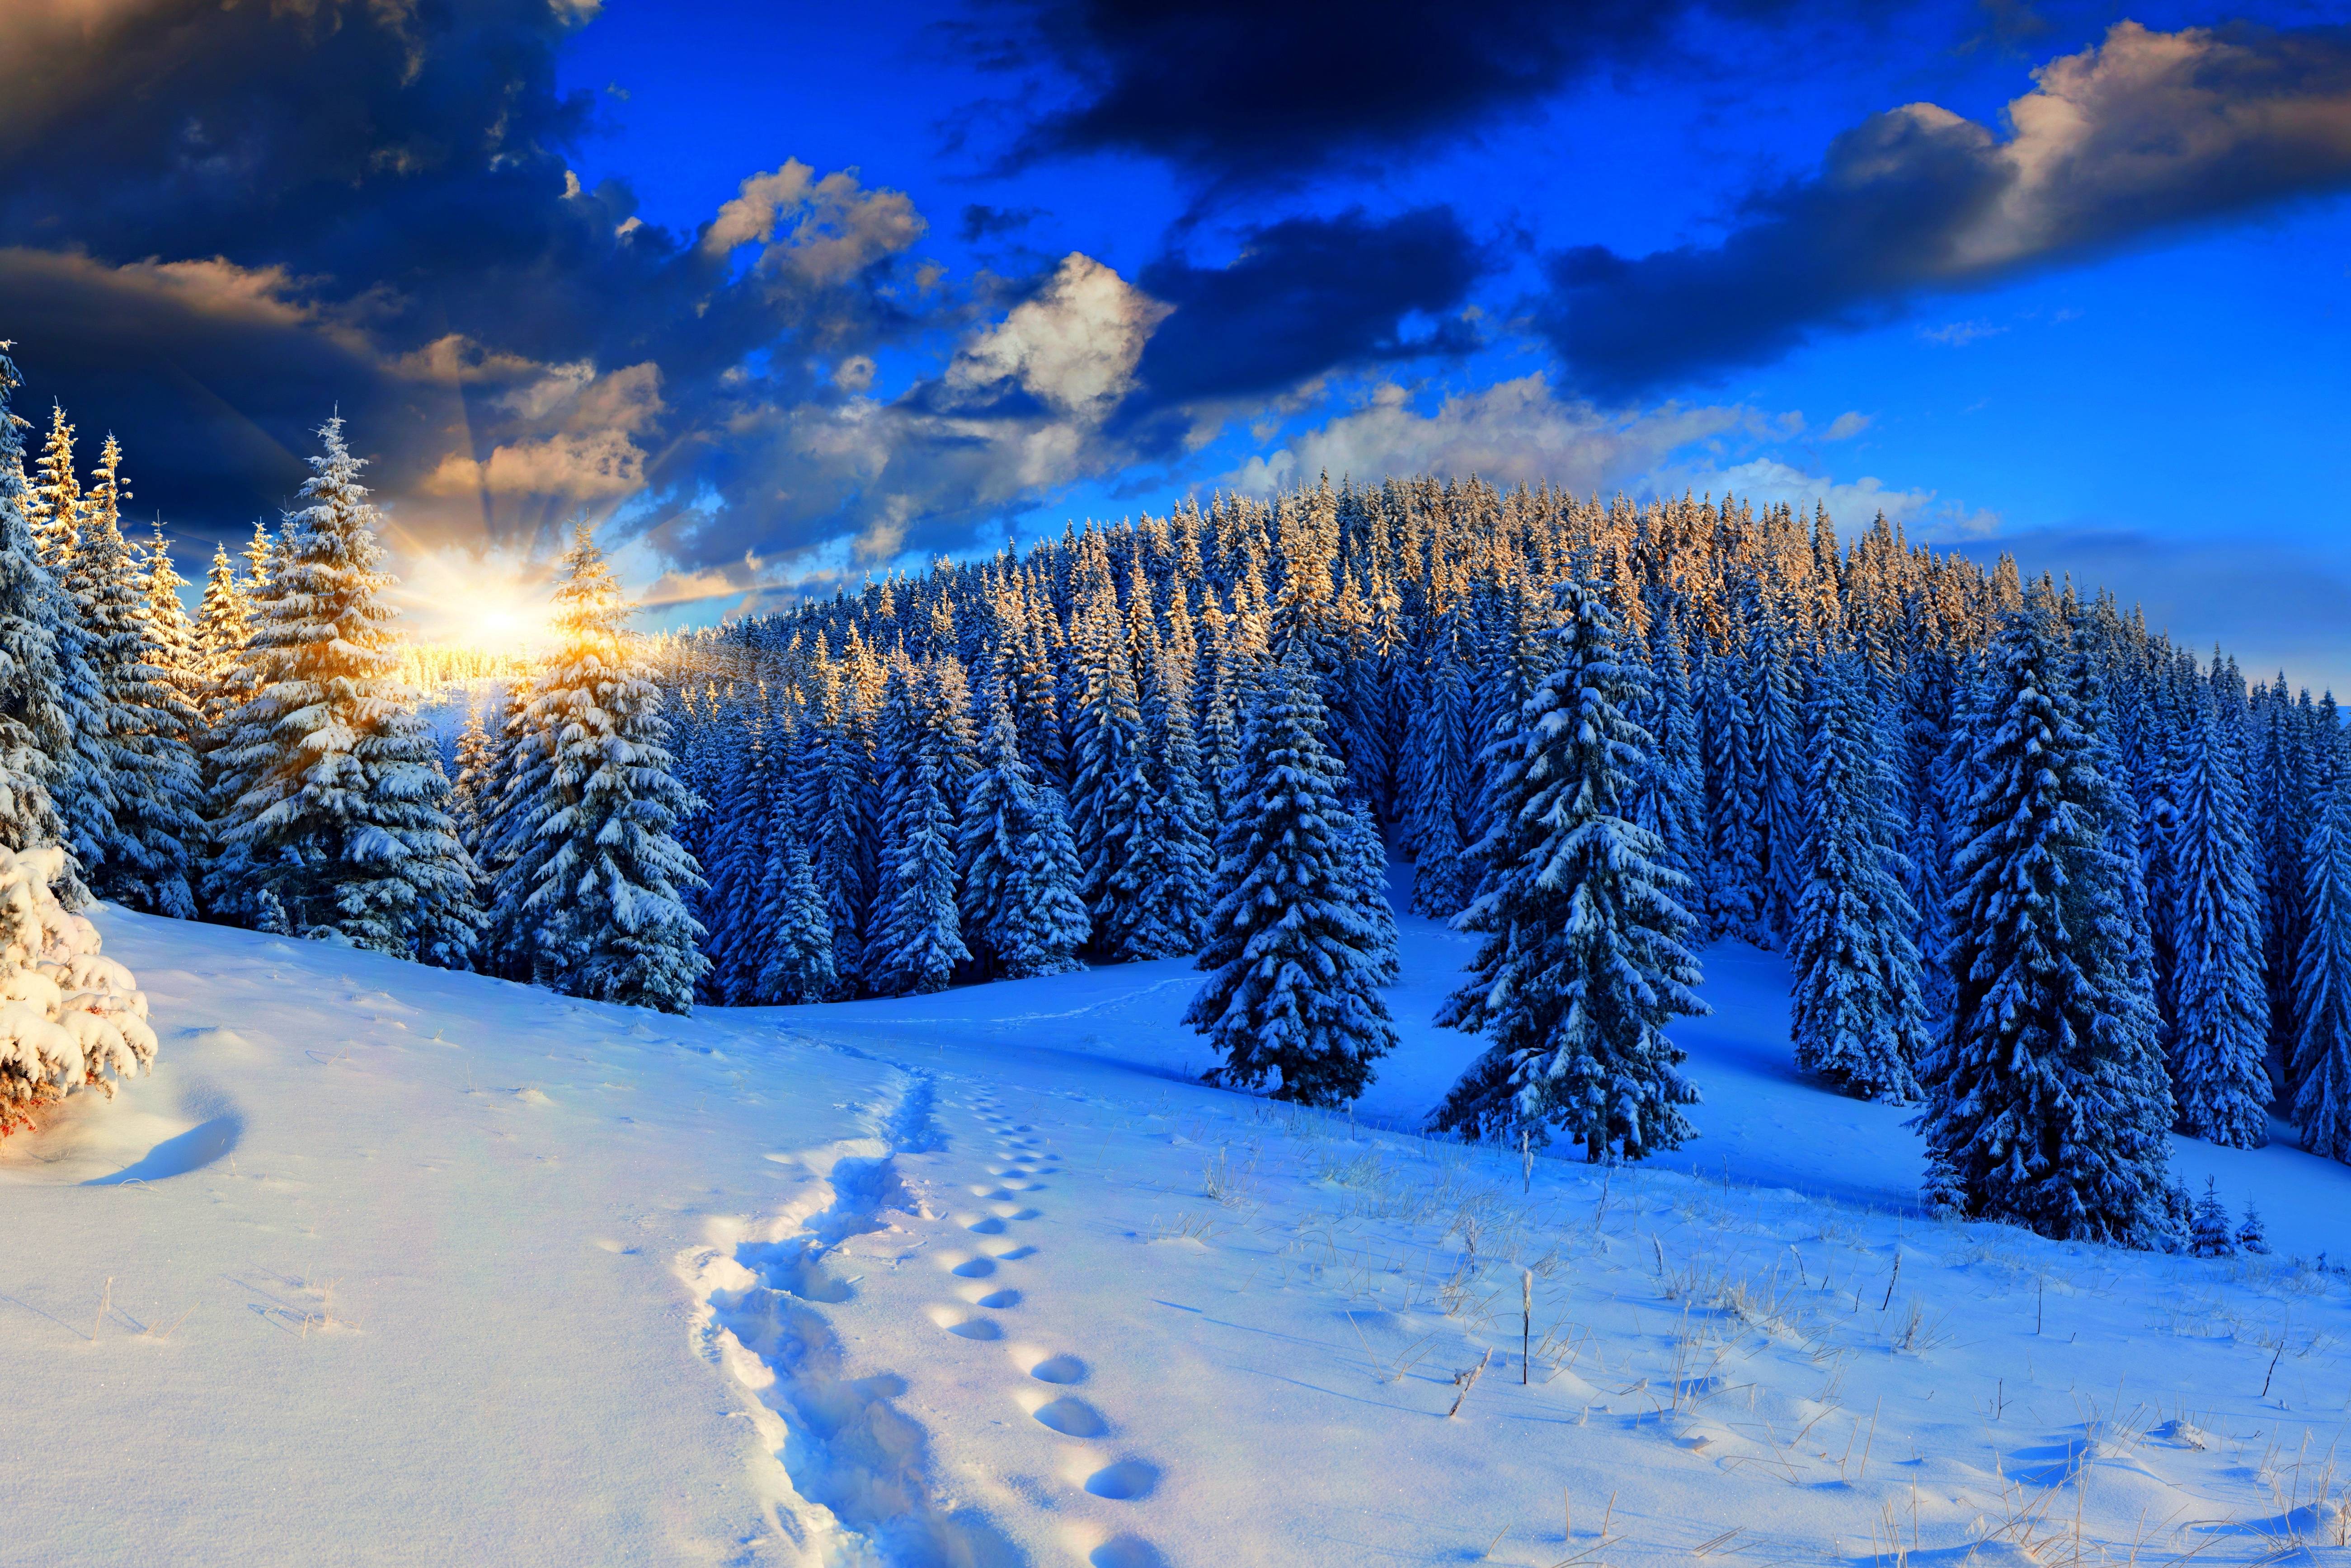 Winter forest. Зимний лес. Зимняя природа. Красивая зима. Сказочный зимний лес.